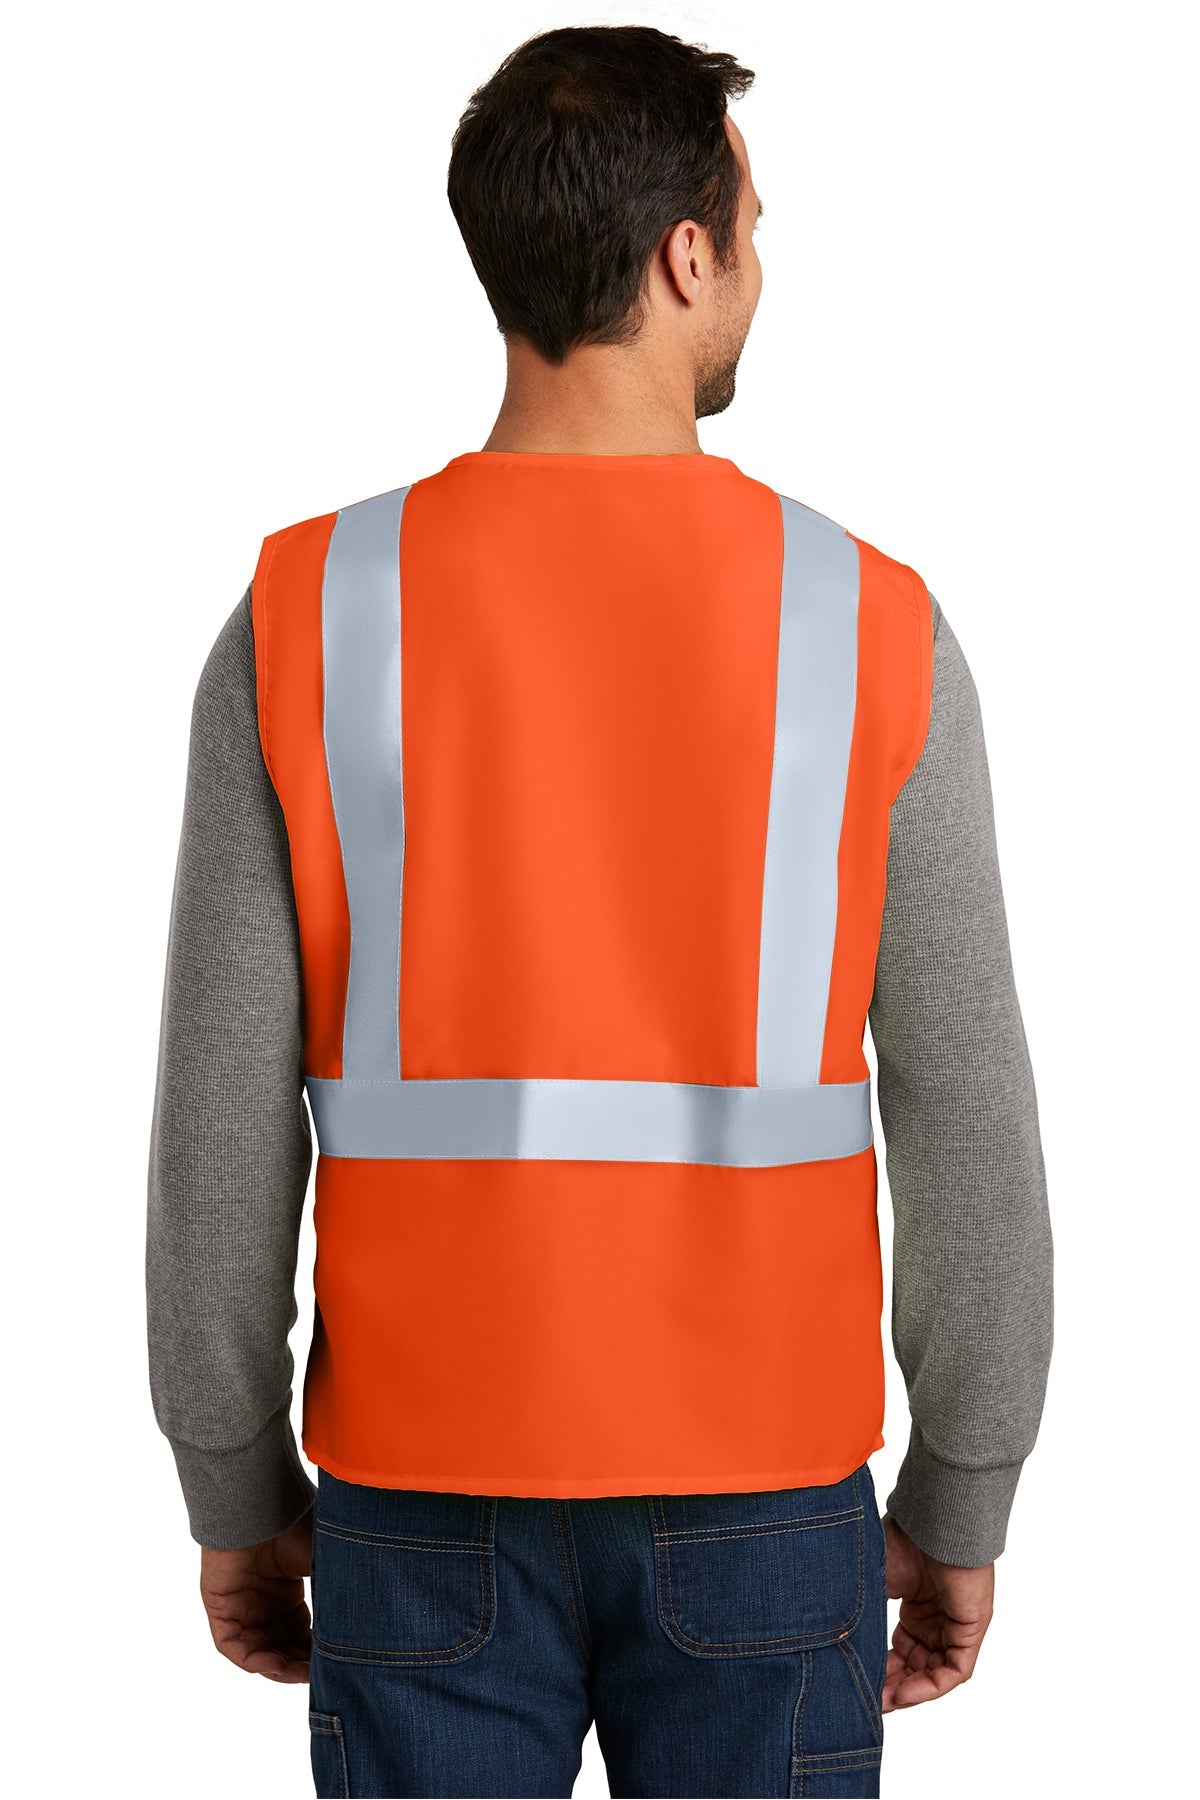 cornerstone_csv400 _safety orange/ reflective_company_logo_jackets